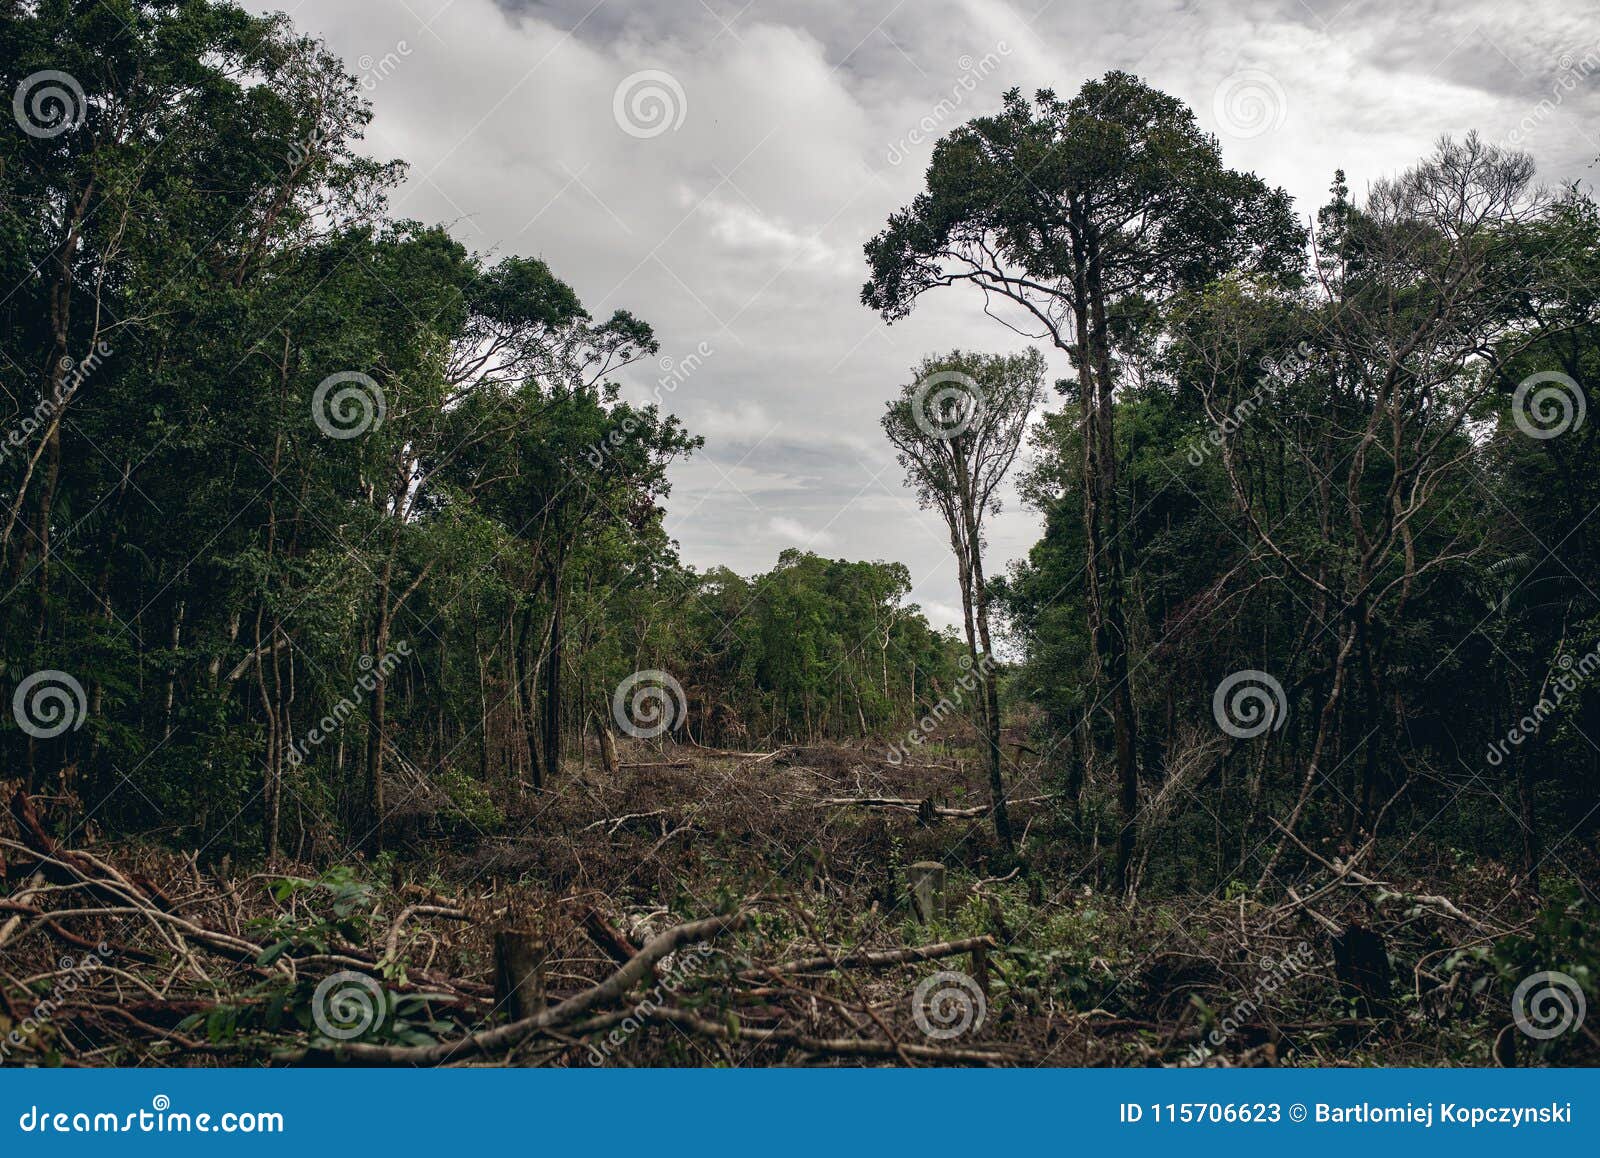 deforestation of a tropical rain forest